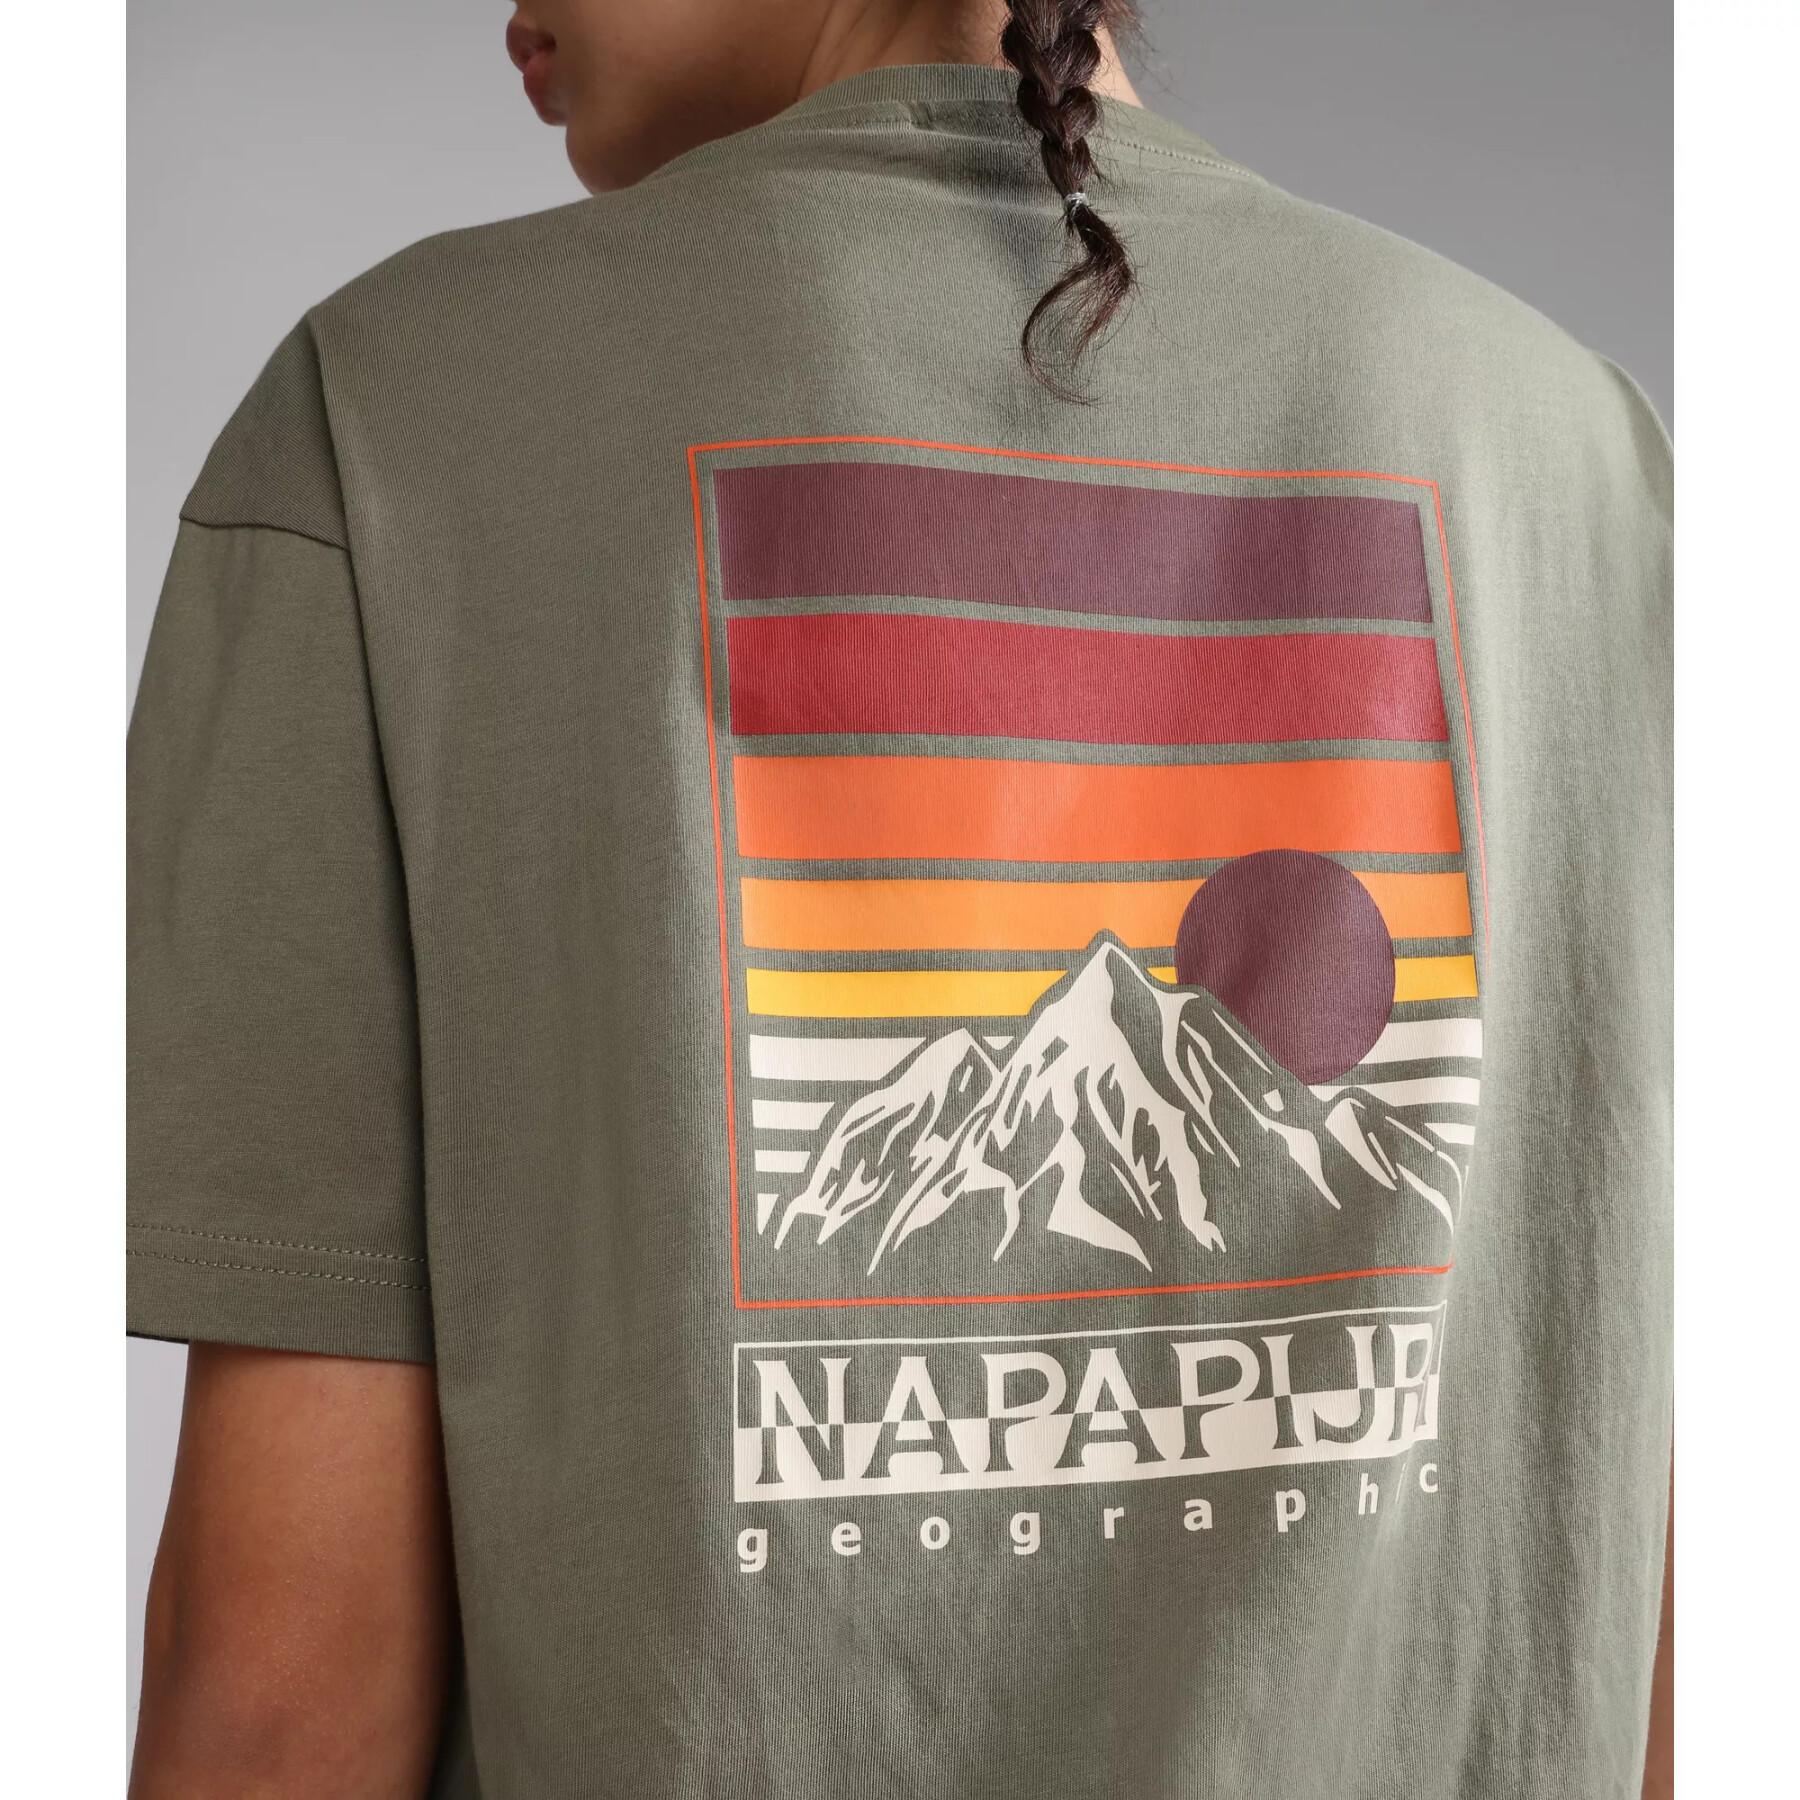 T-shirt Napapijri Bolivar